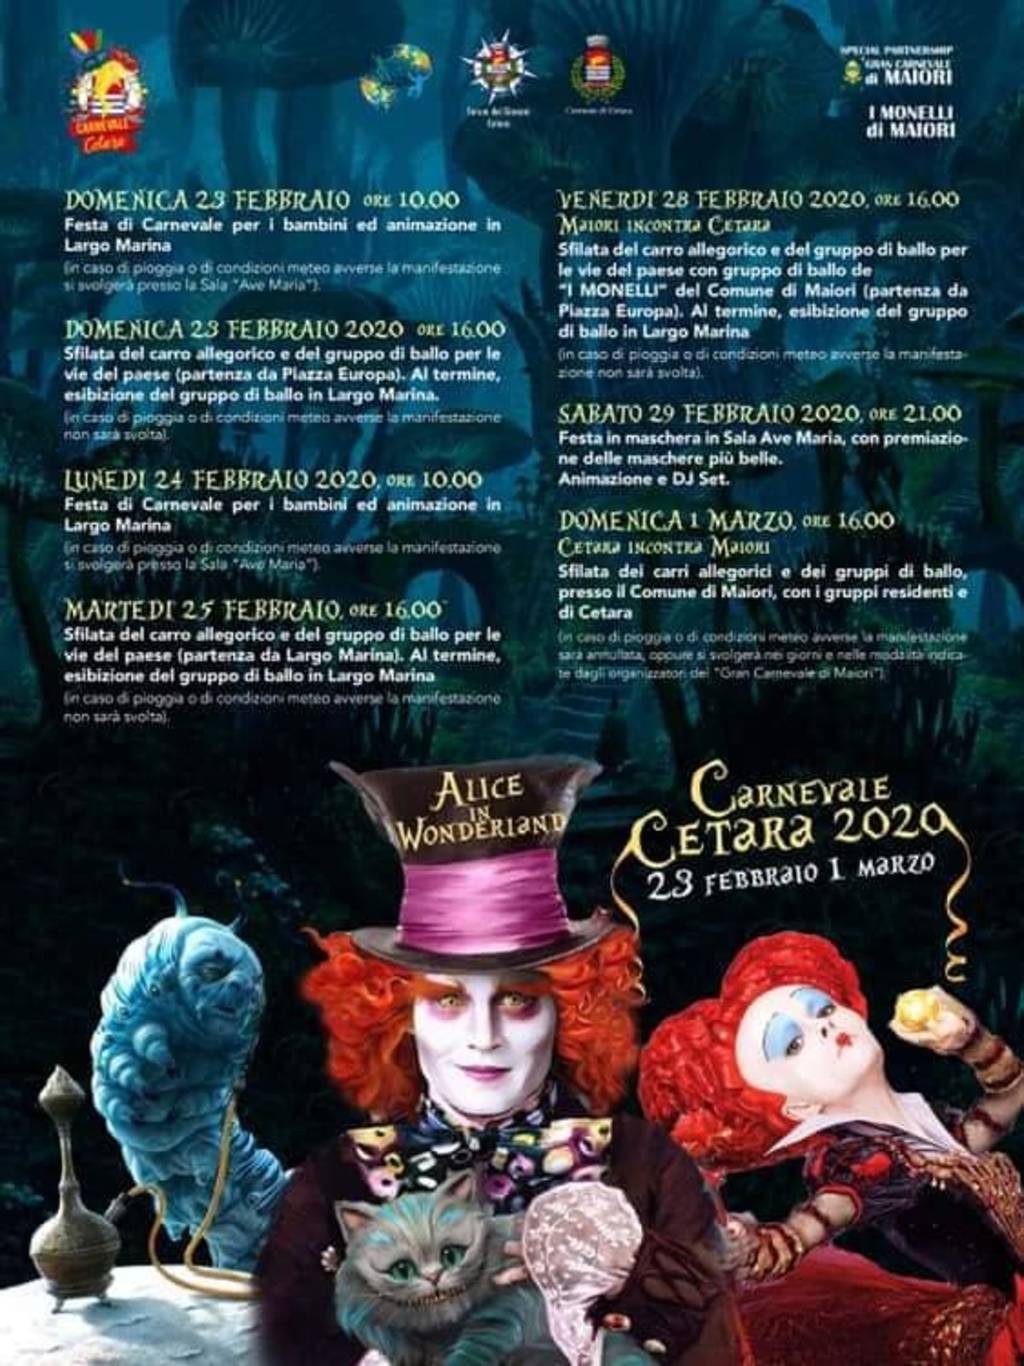 Carnevale Cetara: Alice in Wonderland